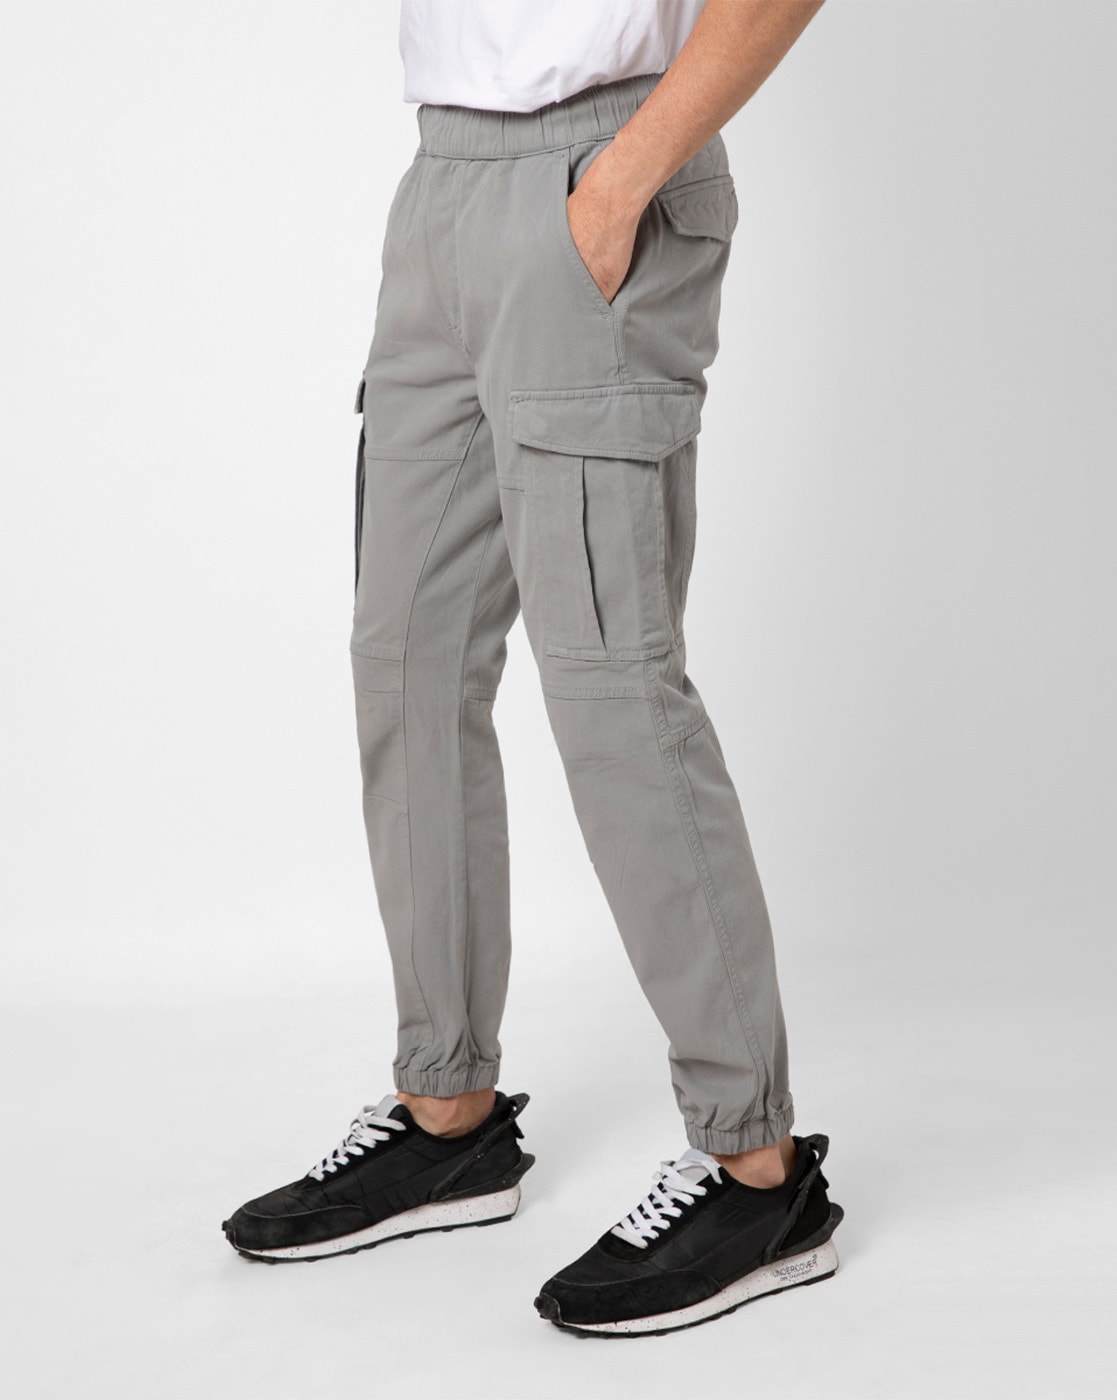 Buy Cream Trousers & Pants for Women by Broadstar Online | Ajio.com